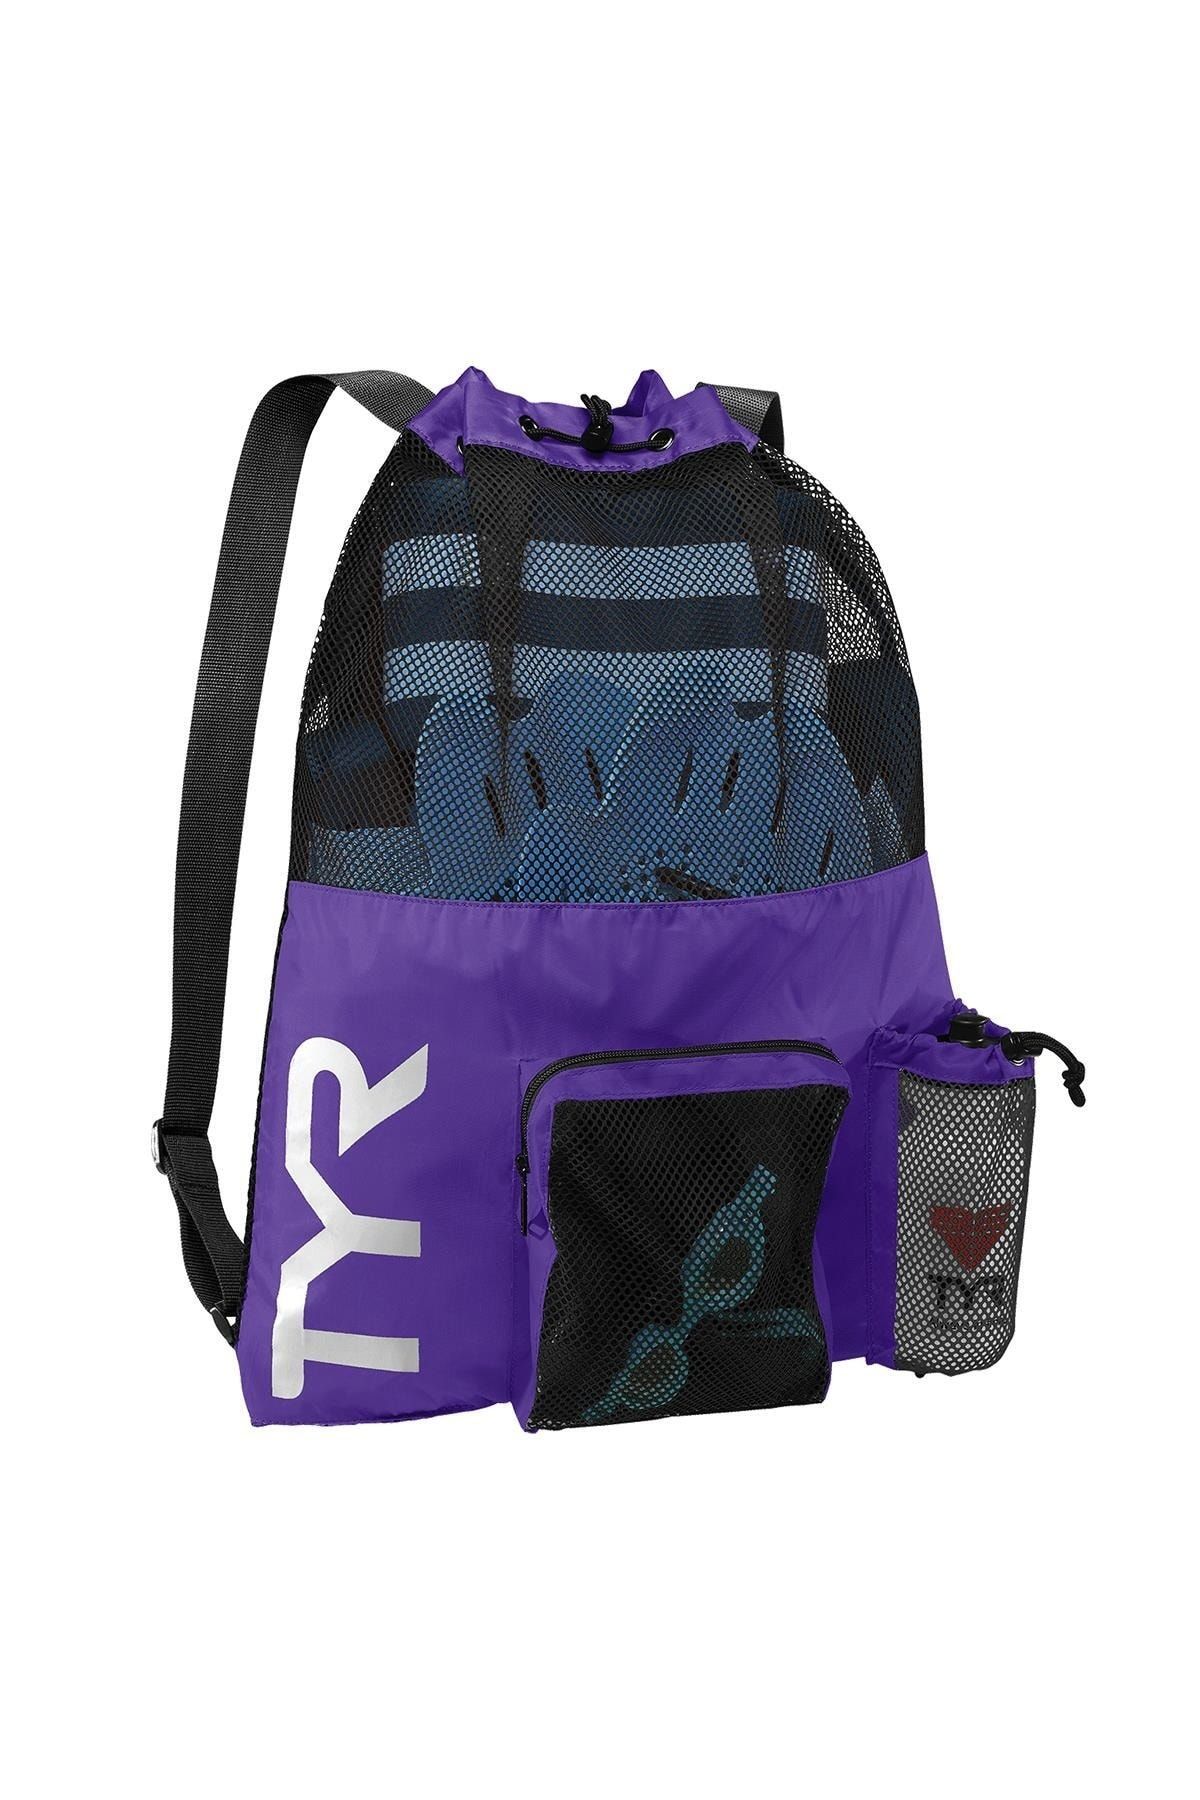 Bulk order on TYR Alliance 30L Backpack at SwimOutlet.com